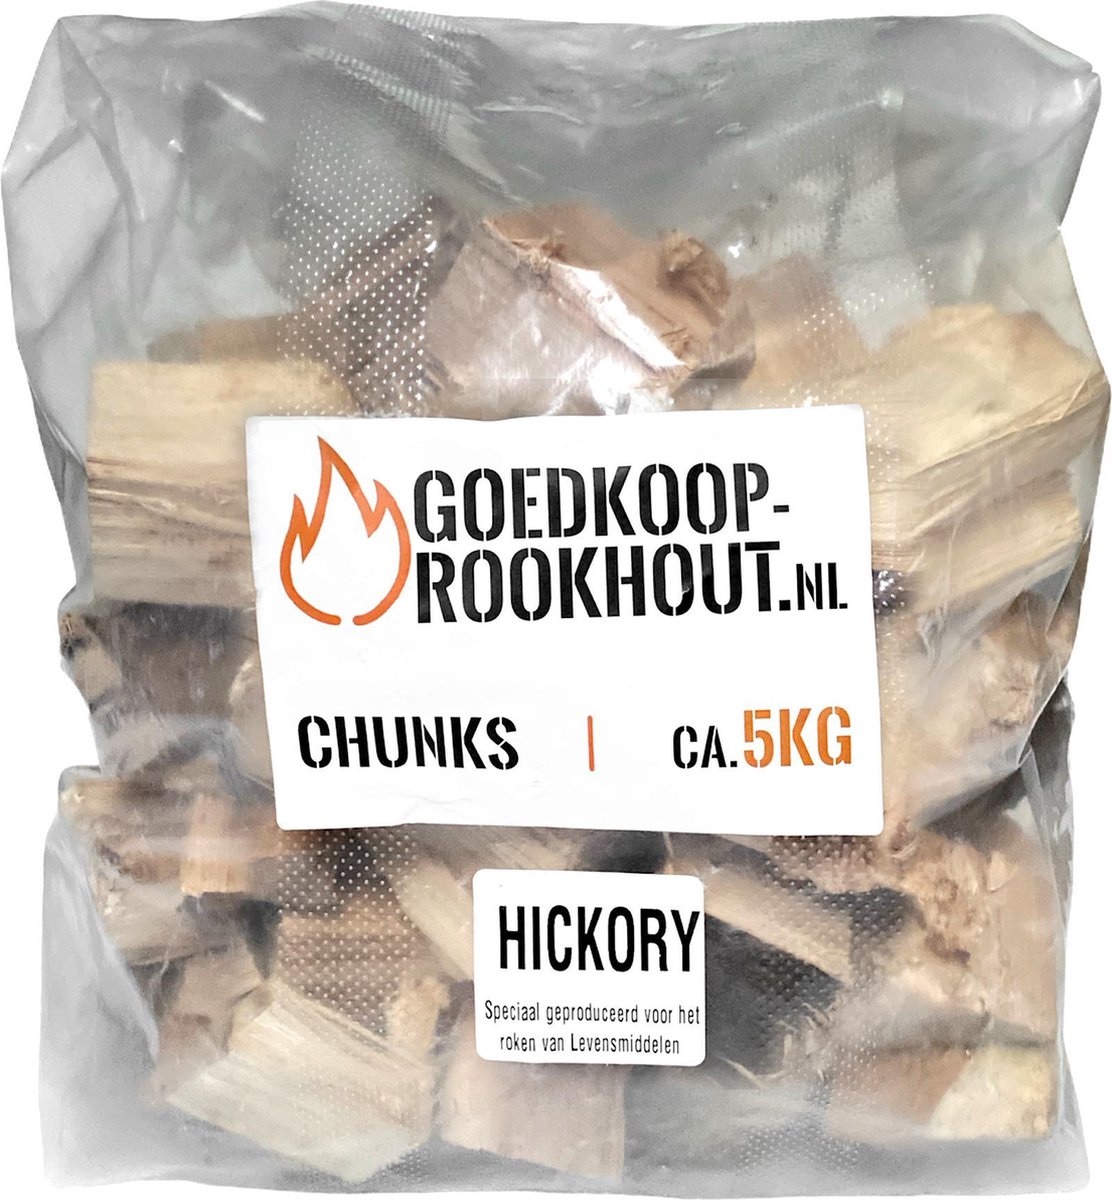 Hickory chunks - 4,5 KG